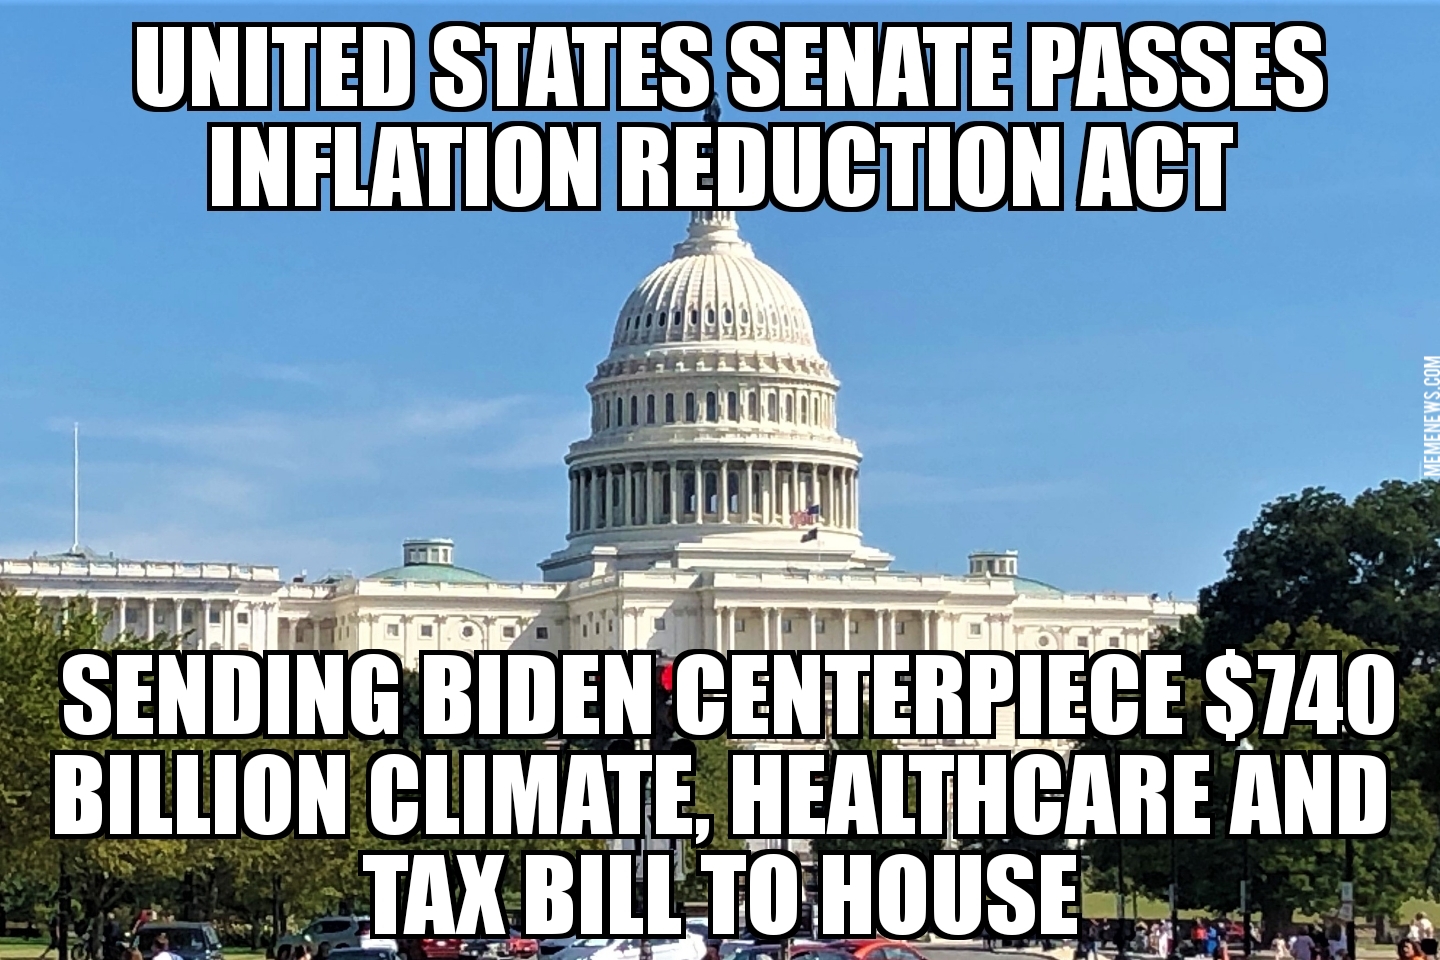 Senate passes Inflation Reduction Act